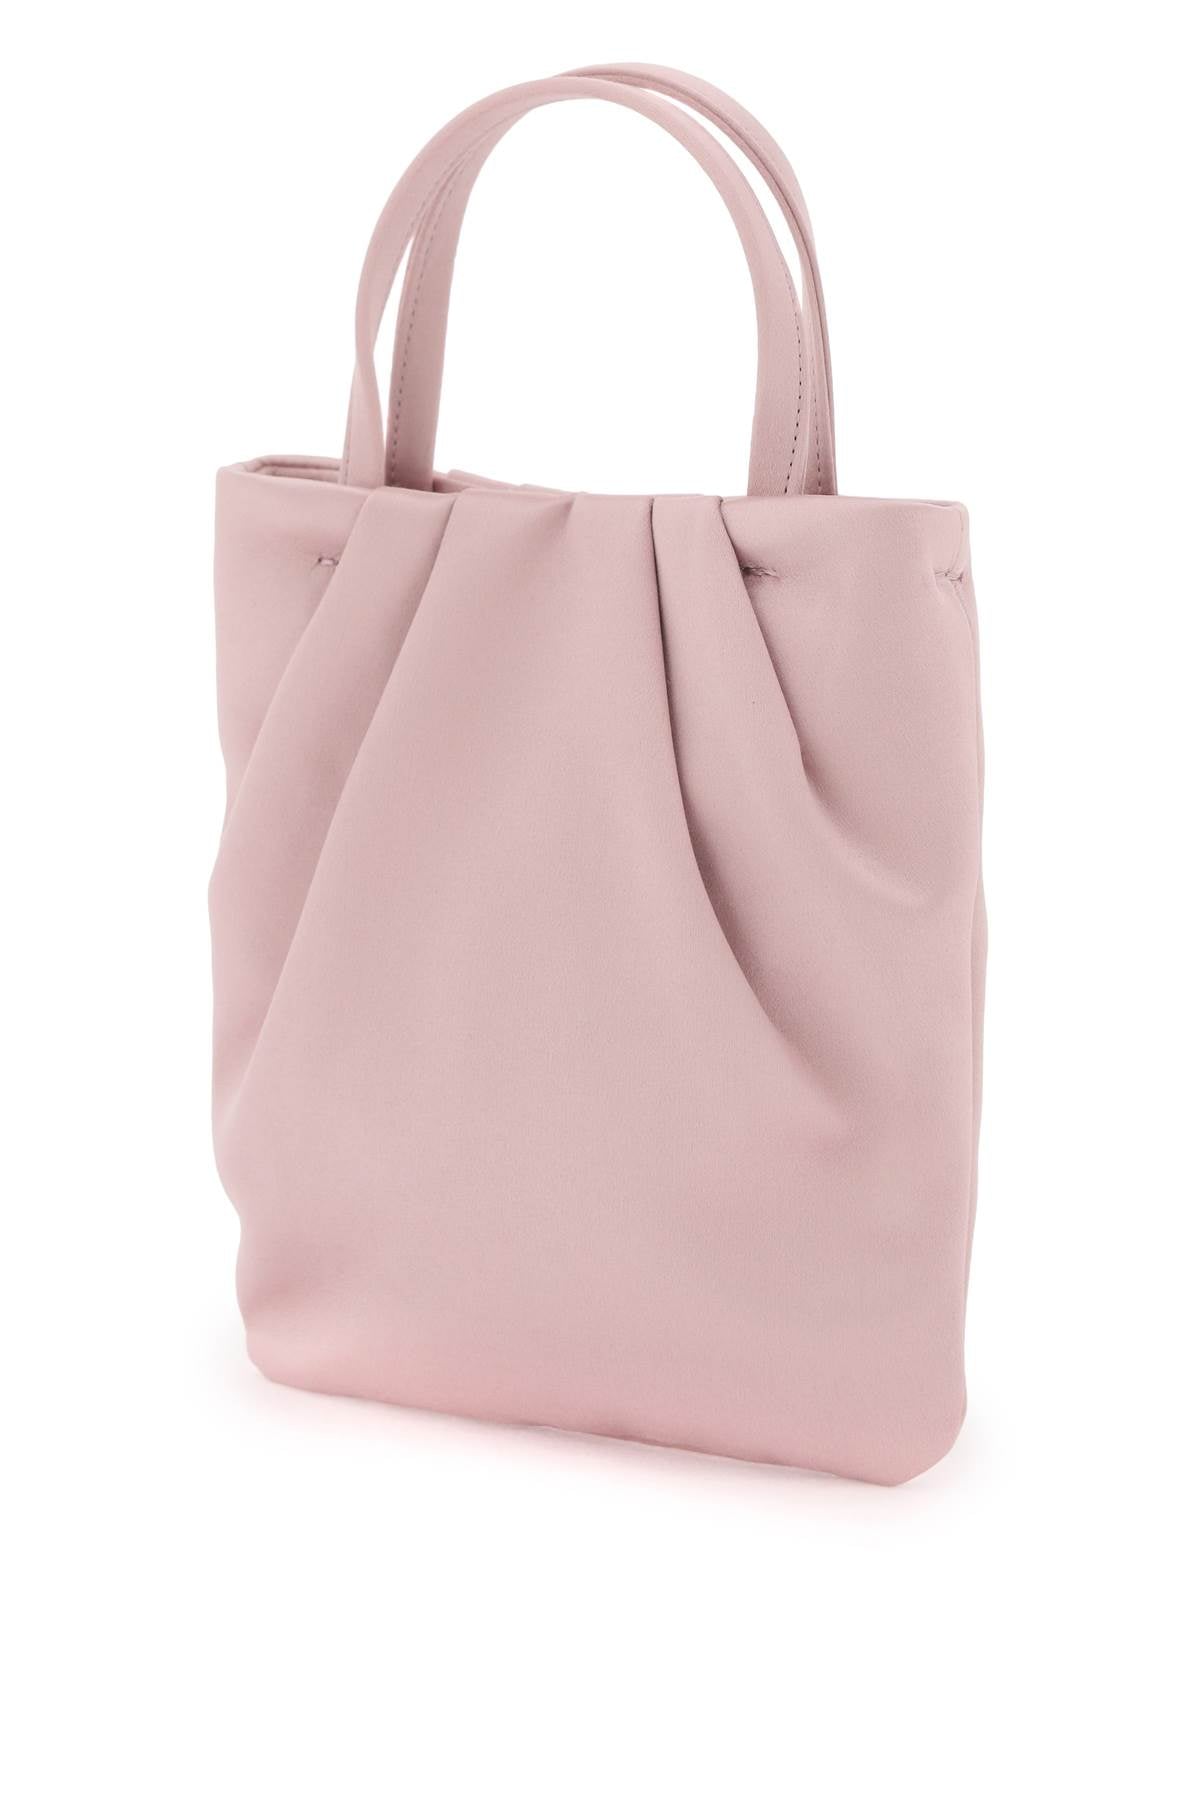 ROGER VIVIER Stunning Pink Satin Handbag with Crystal Bouquet Buckle